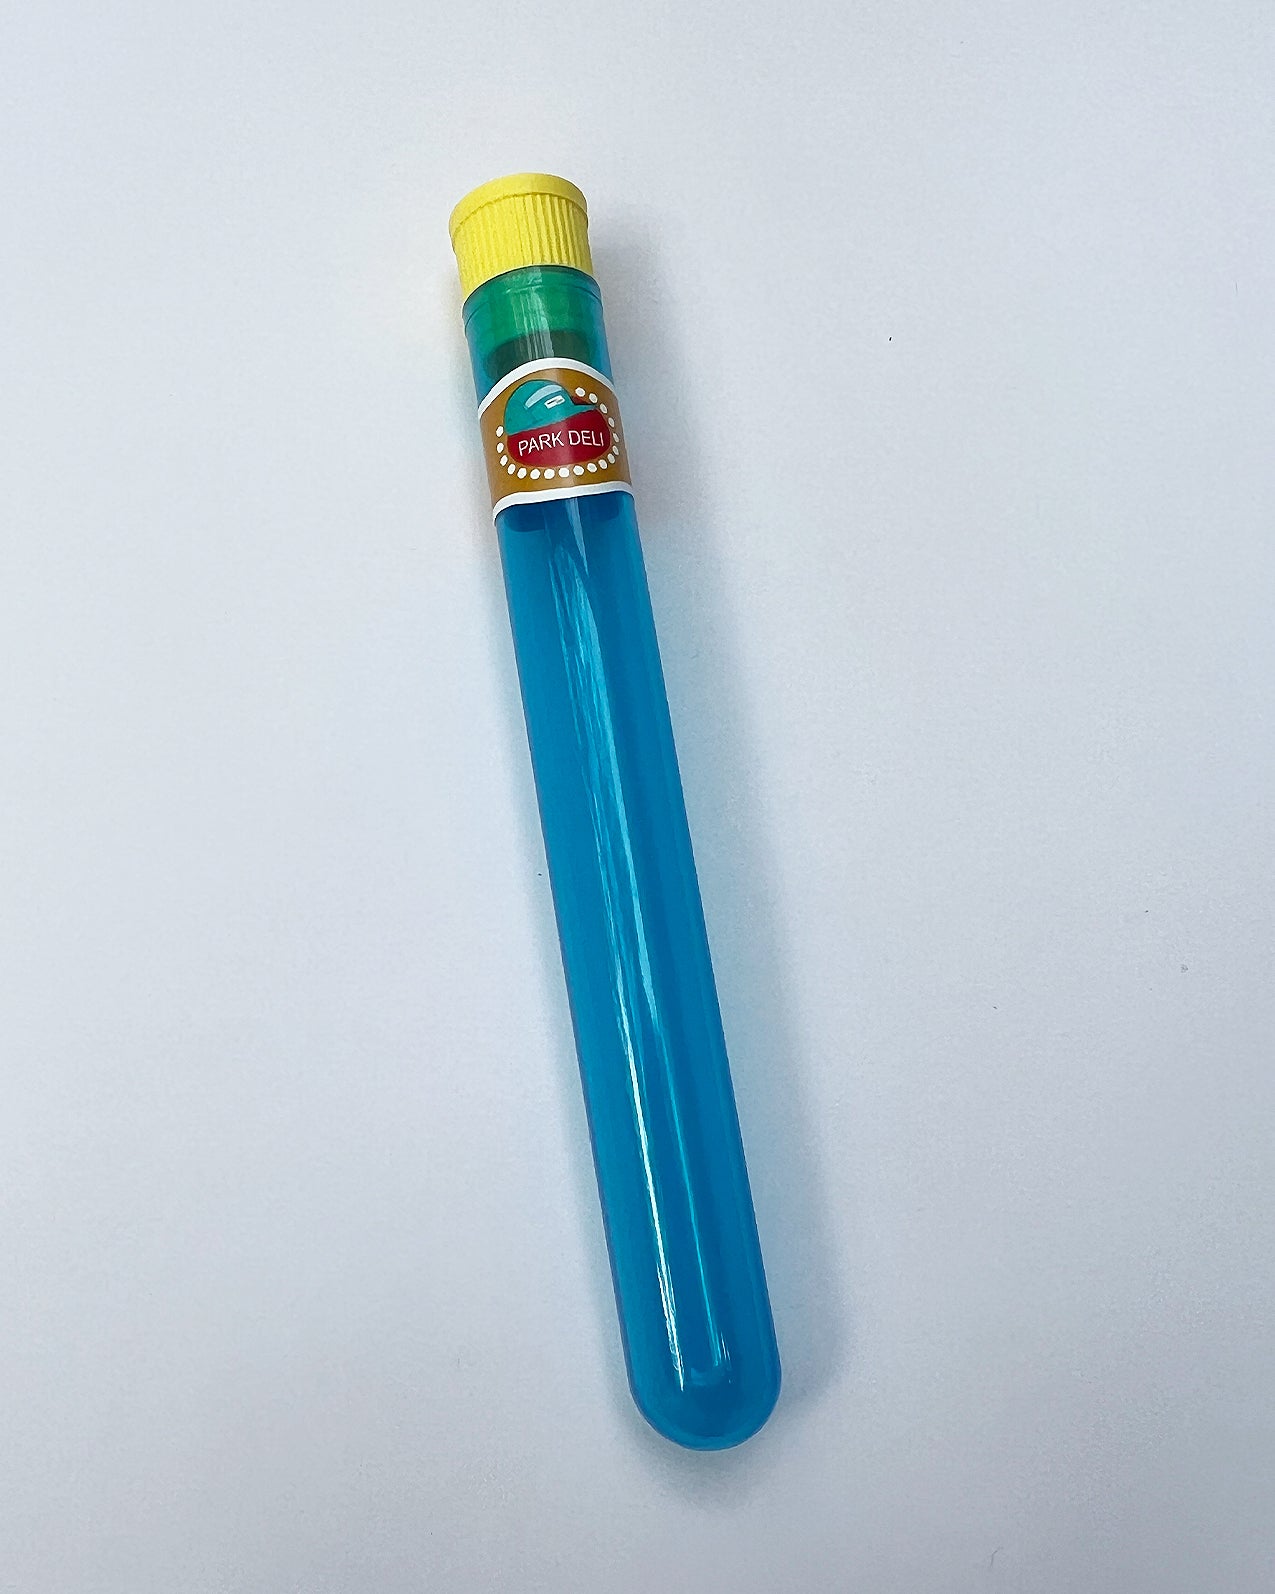 Doob Tubes - Small Airtight Packaging Tube by Doobtube – Sam's Paradise  Vape, CBD, and Smoke